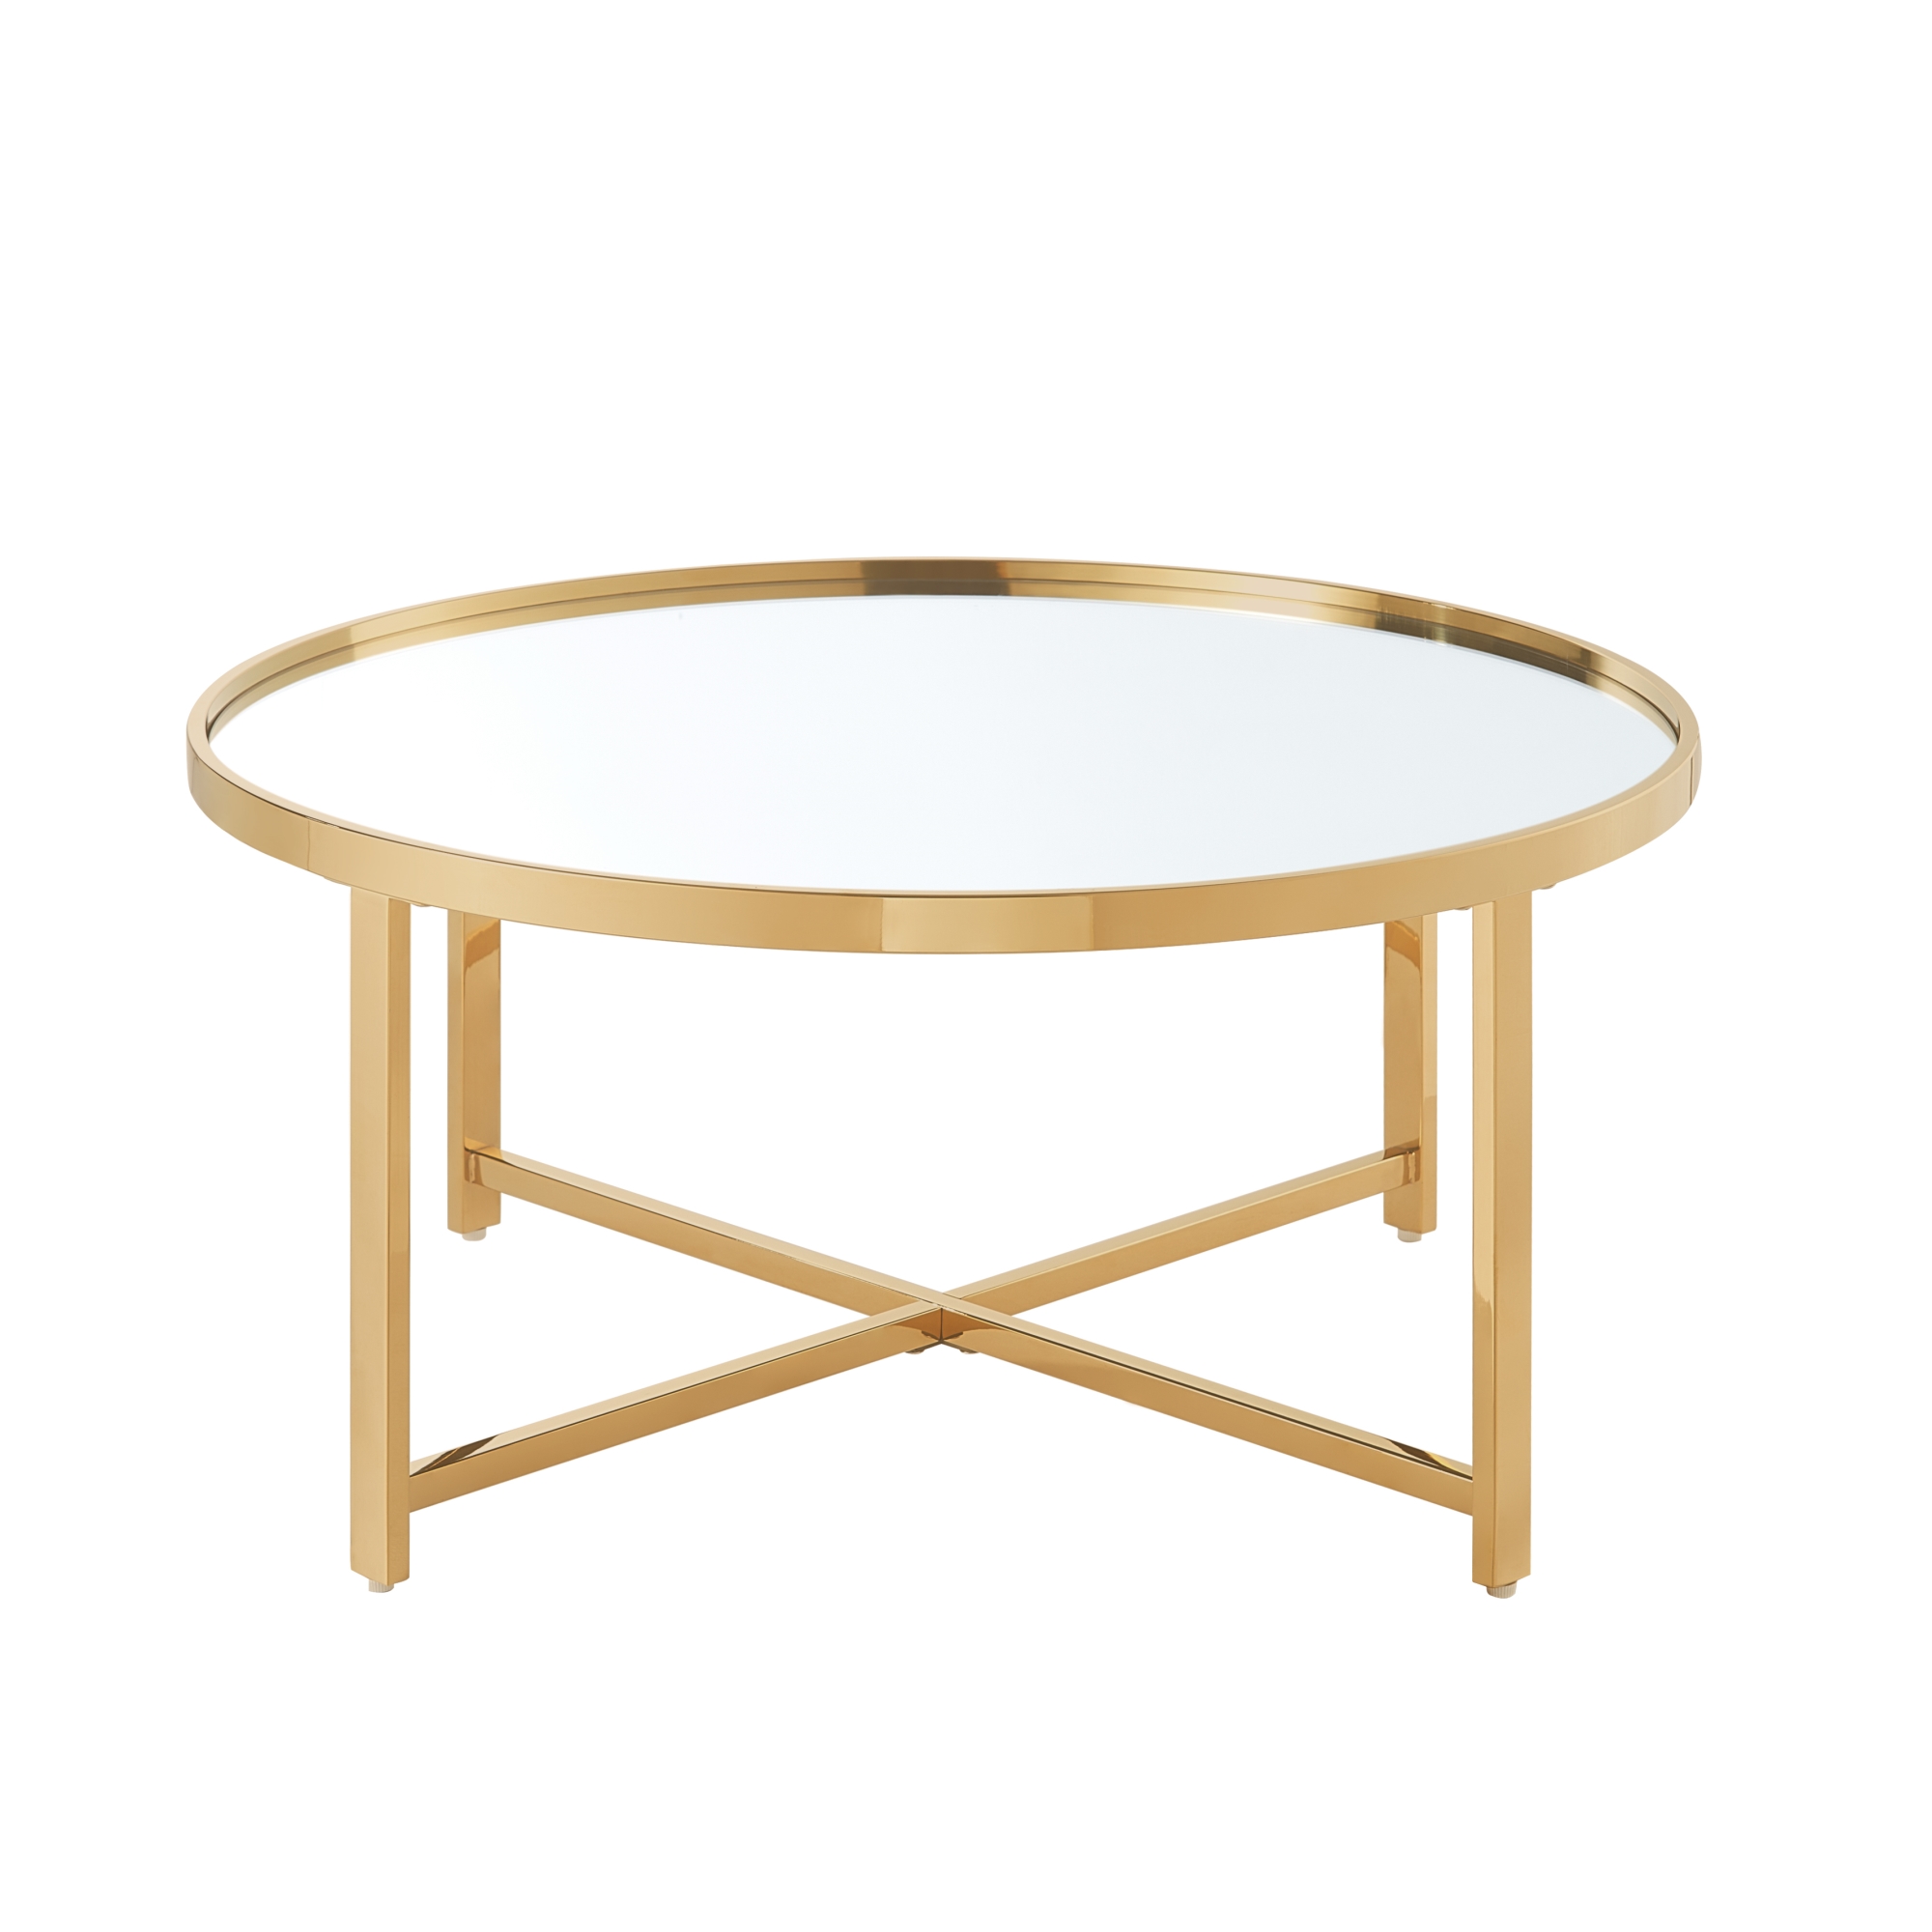 Nicole Miller Kamia Coffee Table /End Table Mirrored Top Cross Legs Design Open Geometric Base